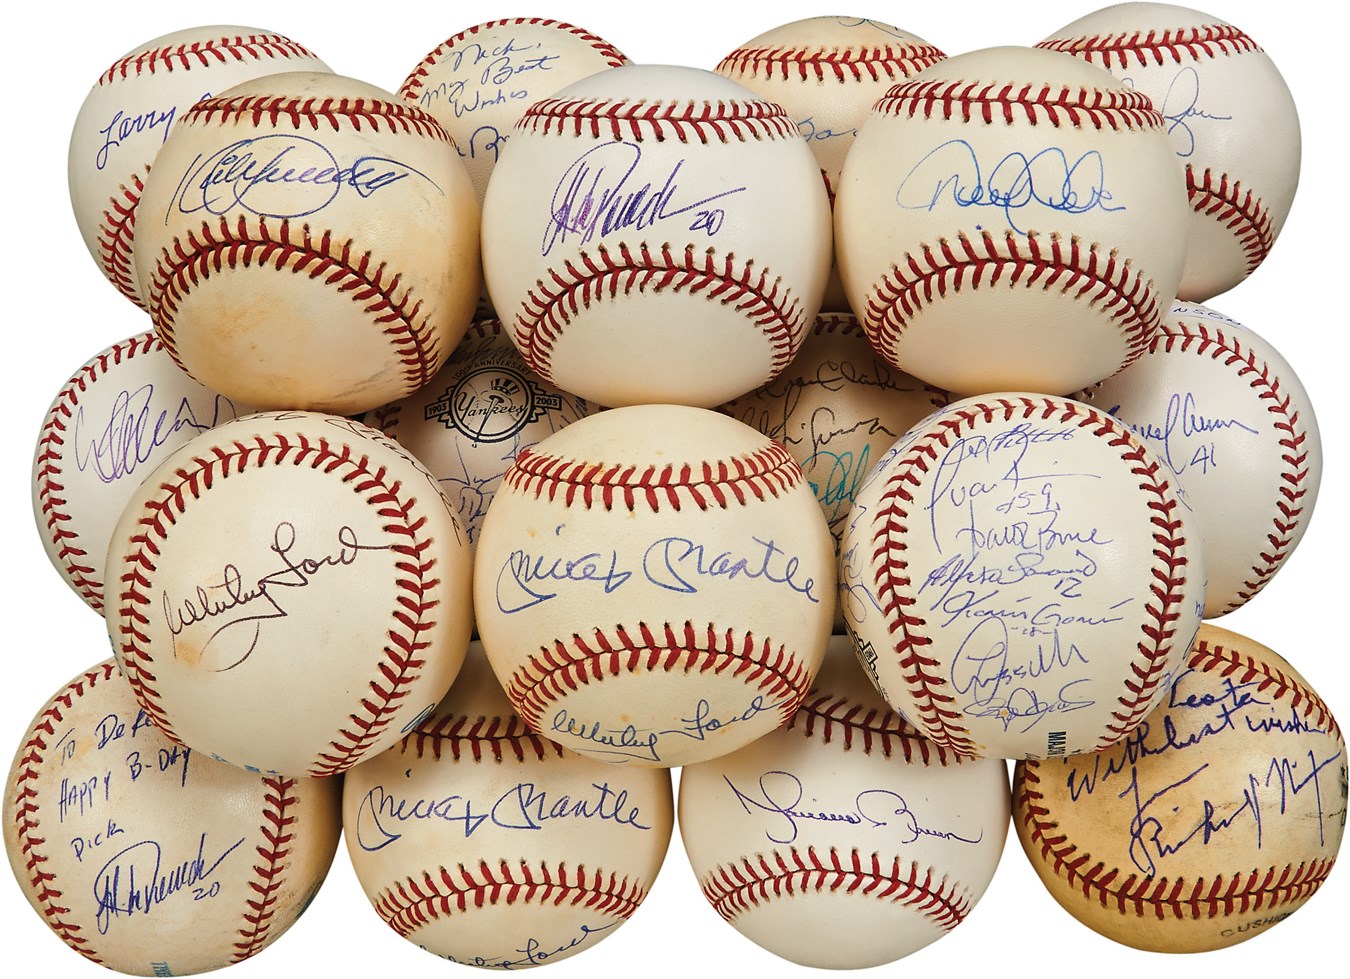 Baseball Autographs - Fantastic Signed Baseball Collection from ex-NY Yankee (425+)